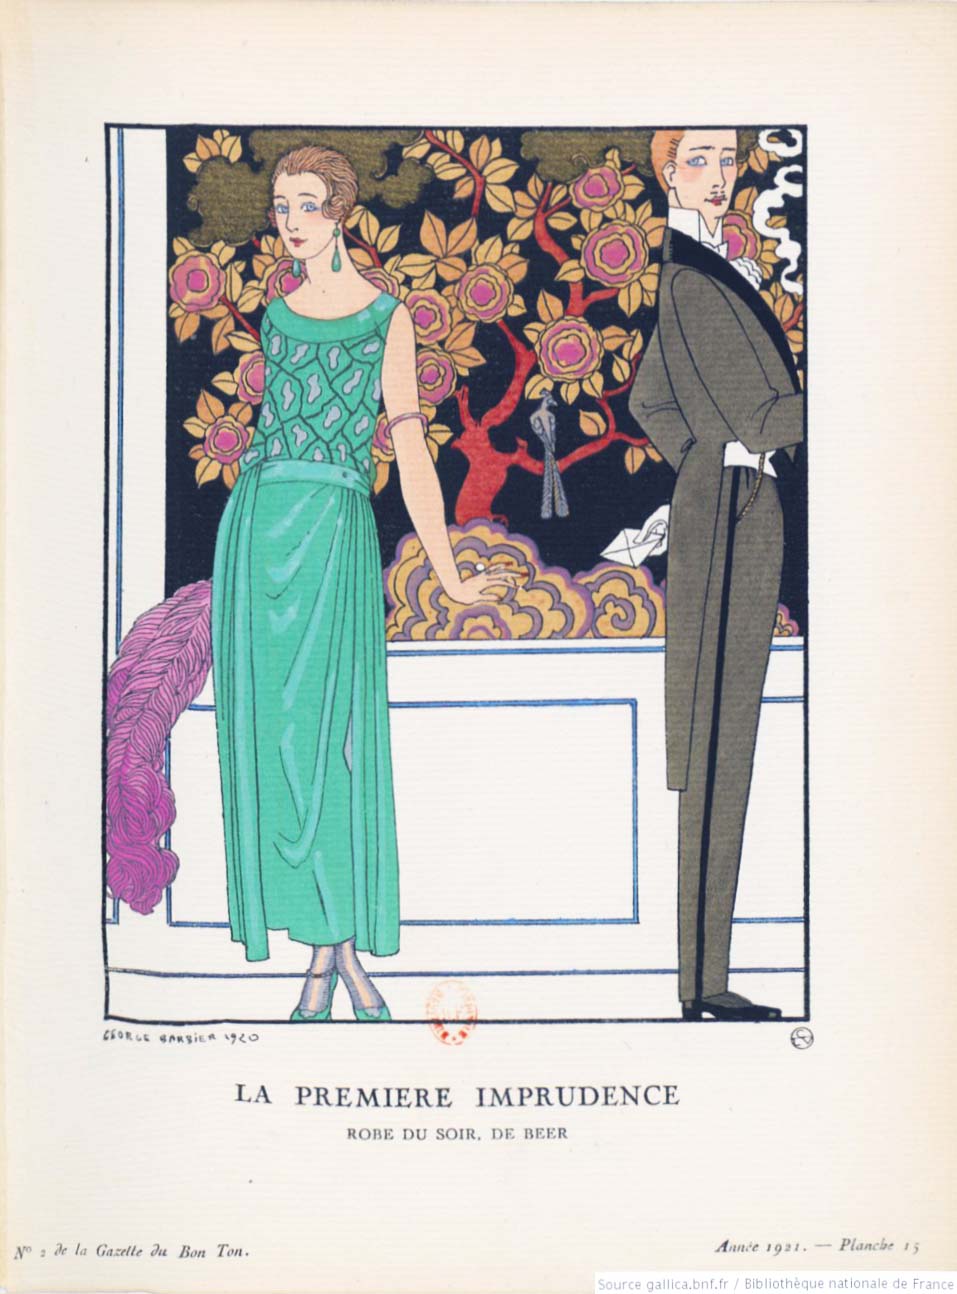 The original La Premiere Imprudence by George Barbier